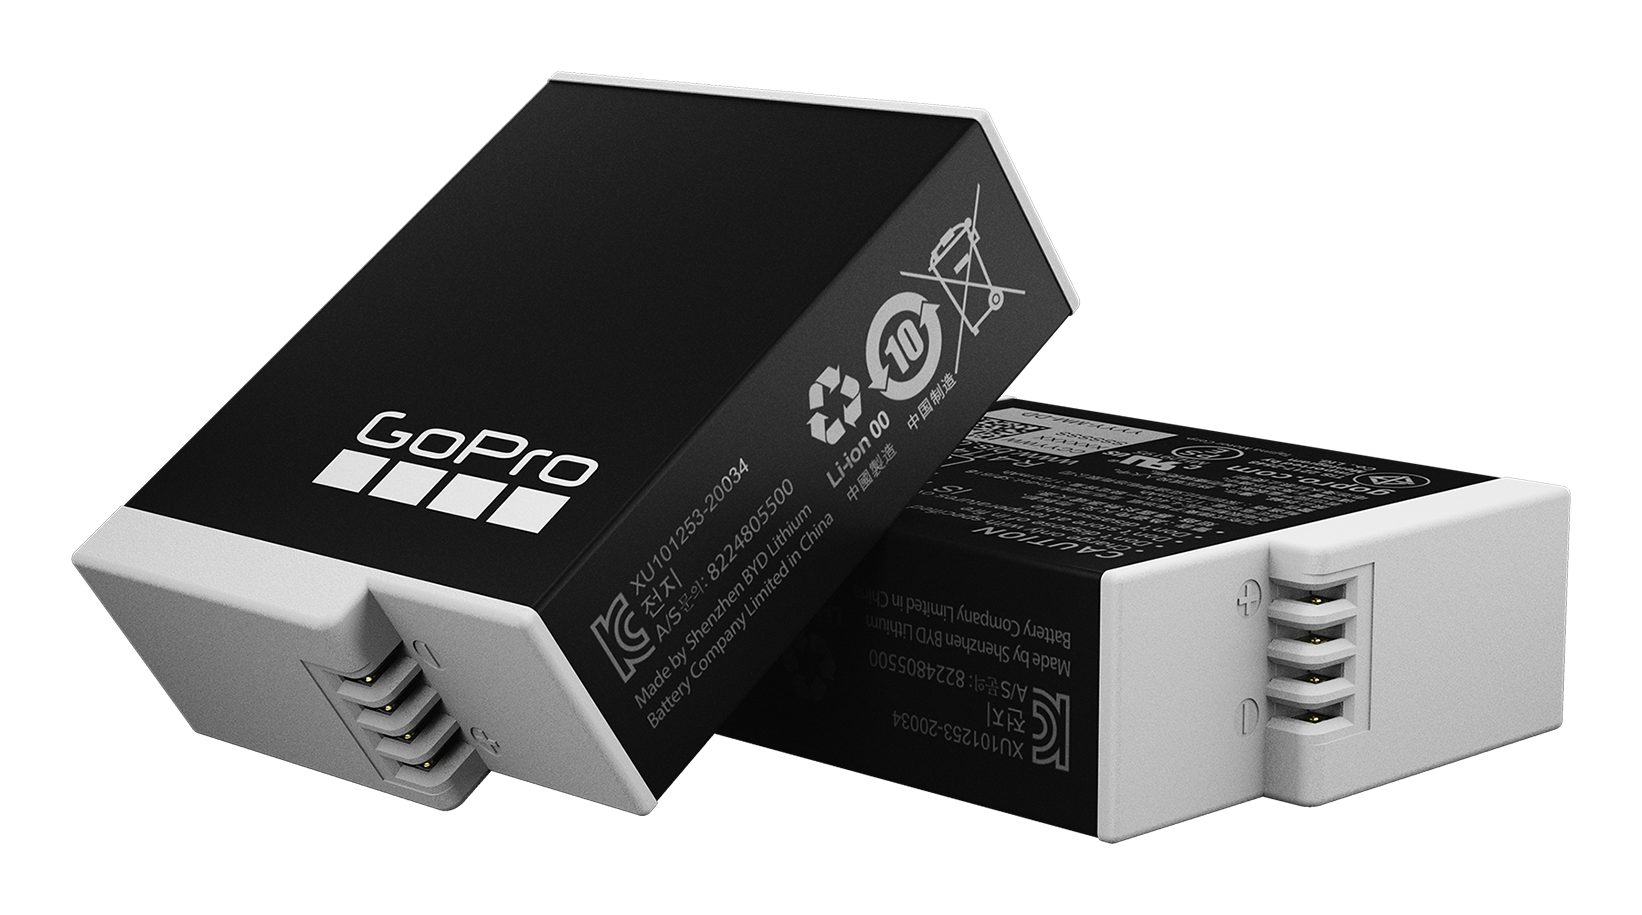 GoPro Enduro Battery 2-Pack